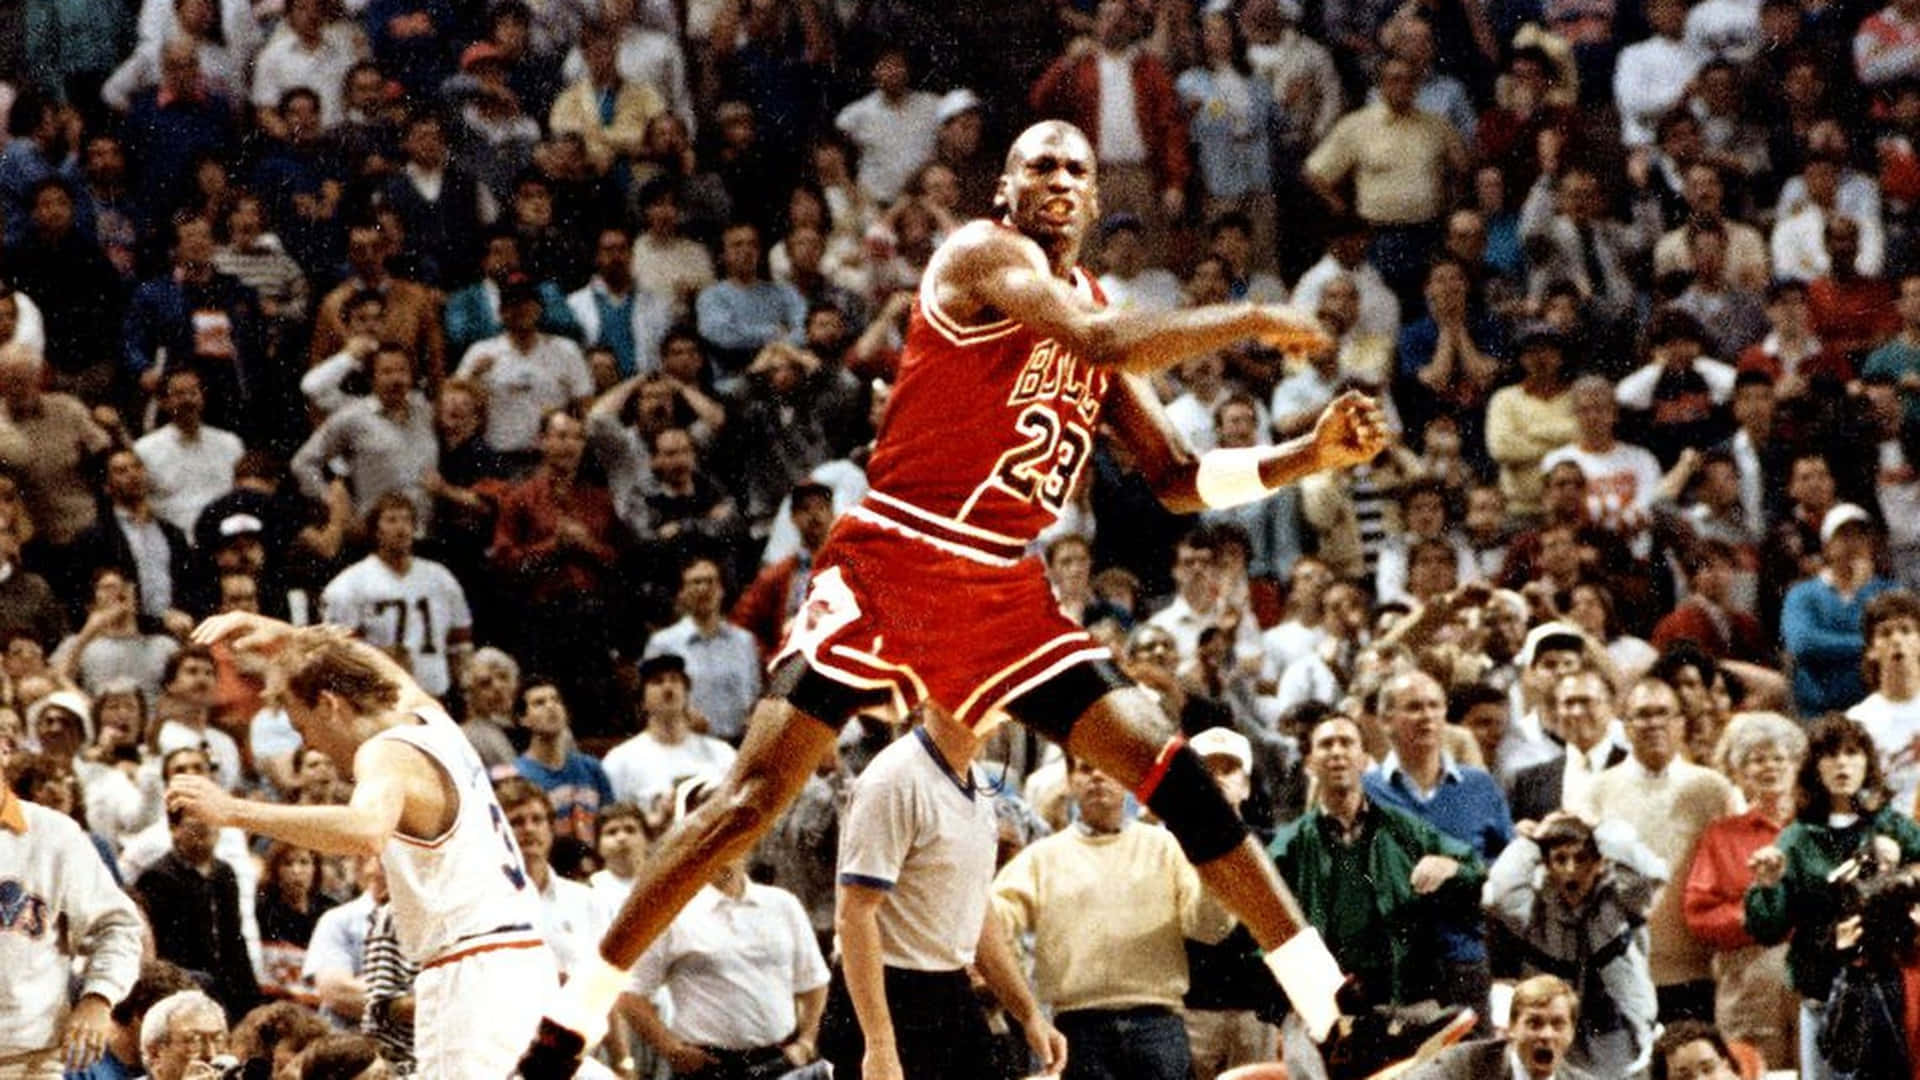 Enjoy the classic style of the Michael Jordan Jersey Wallpaper